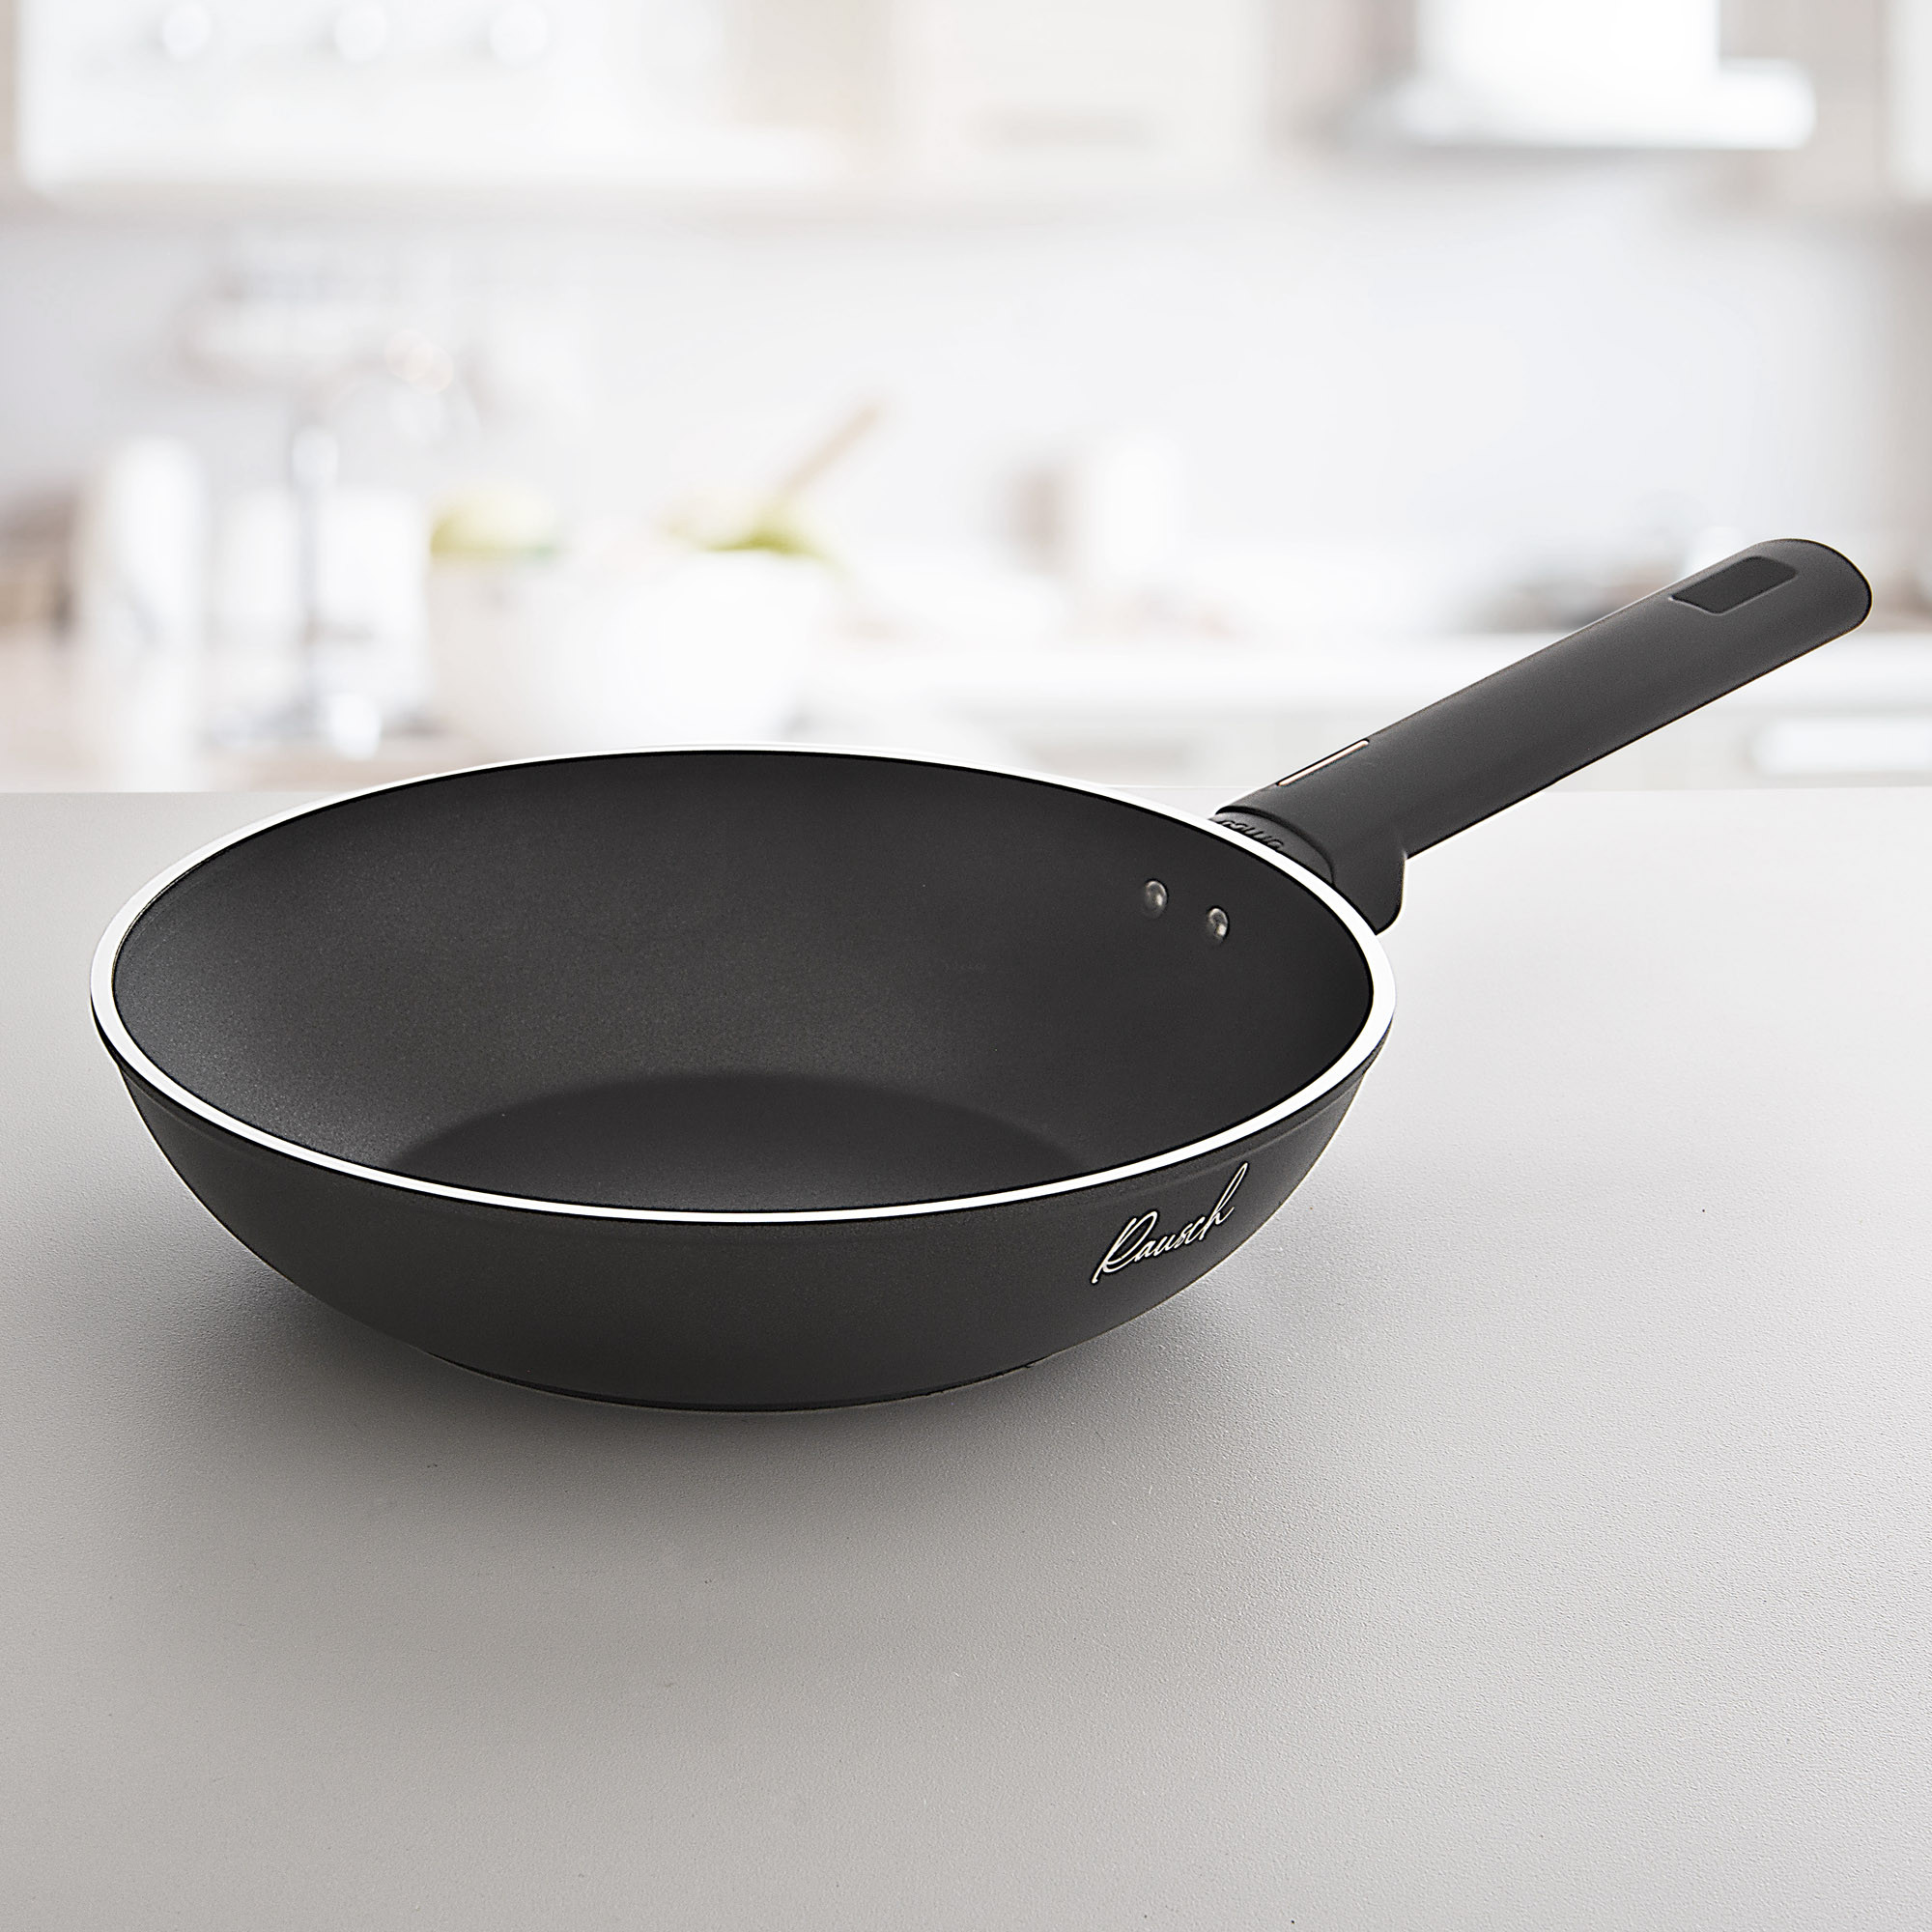 Sartén wok antiadherente de 24cm Signature Umco elaborada en aluminio.